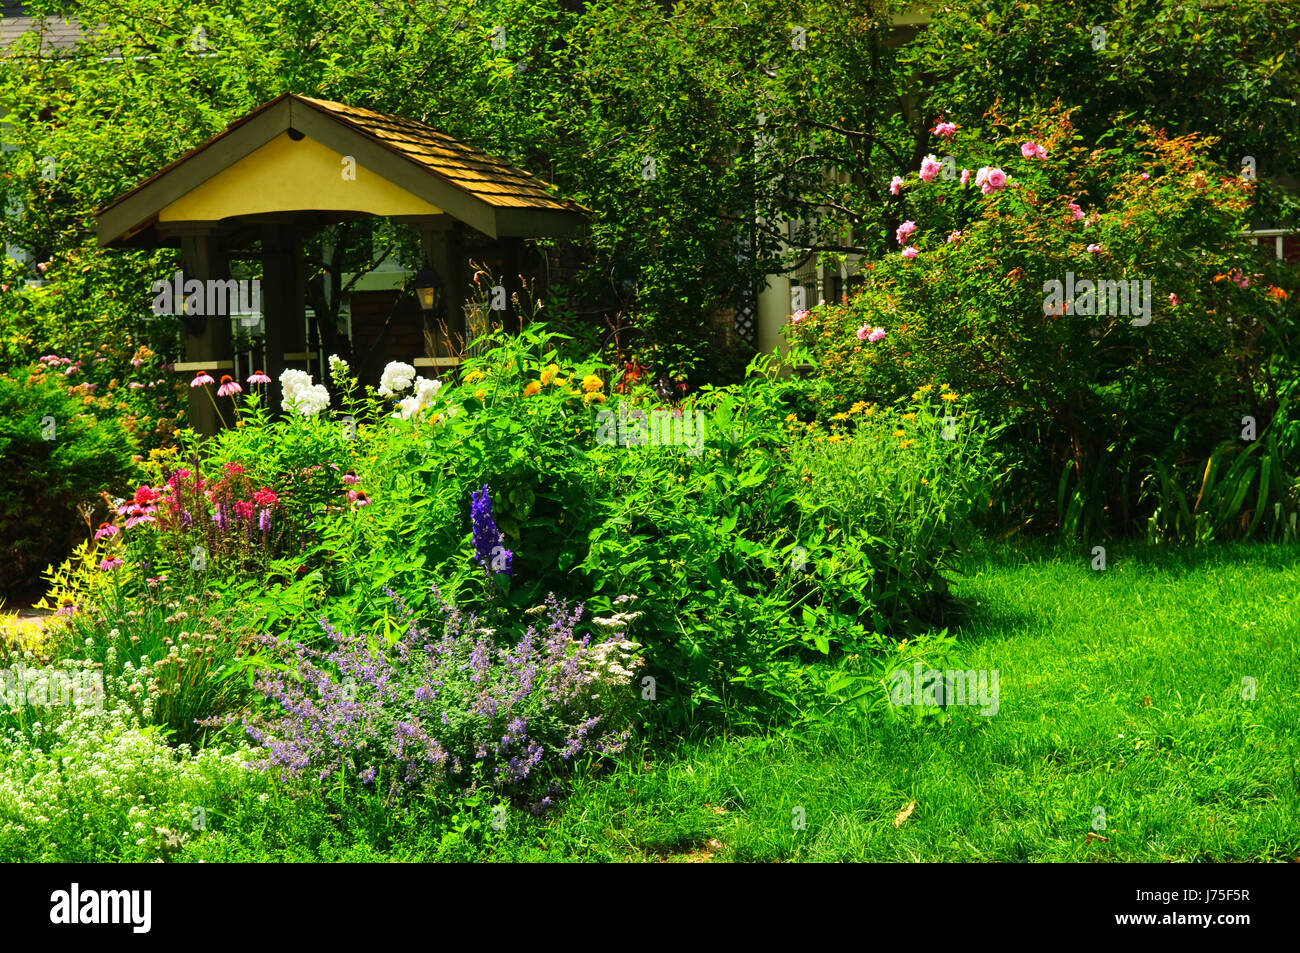 Giardino fiore fiori paesaggio vegetale verde erba aiuola aiuola house Foto Stock